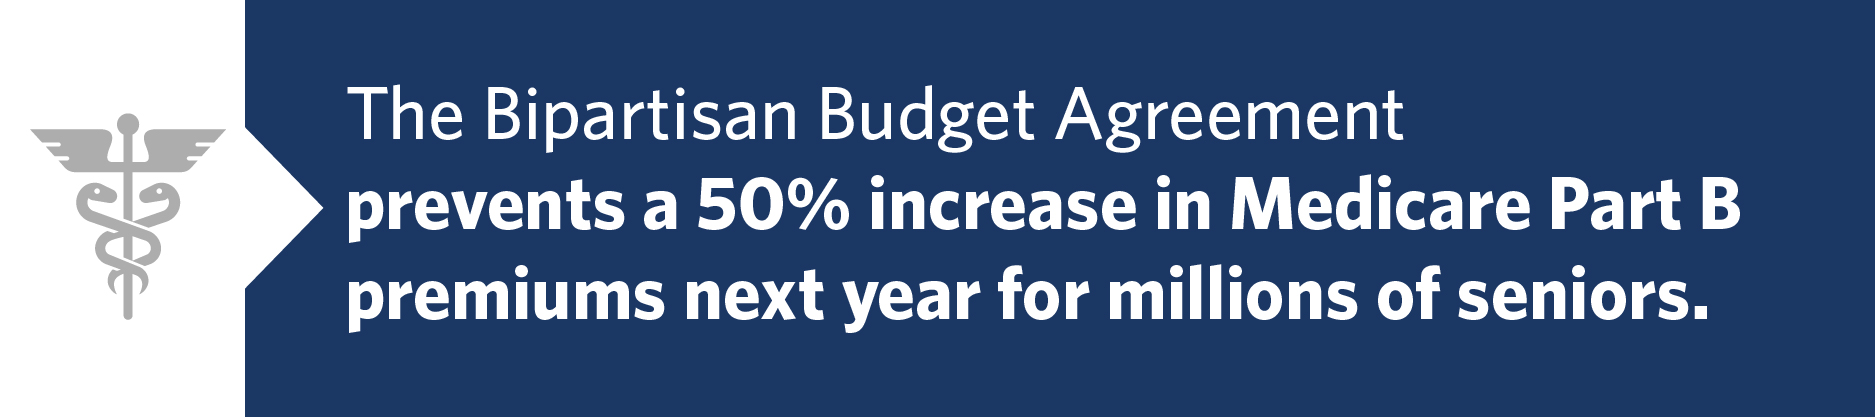 Bipartisan Budget Agreement Medicare Part B